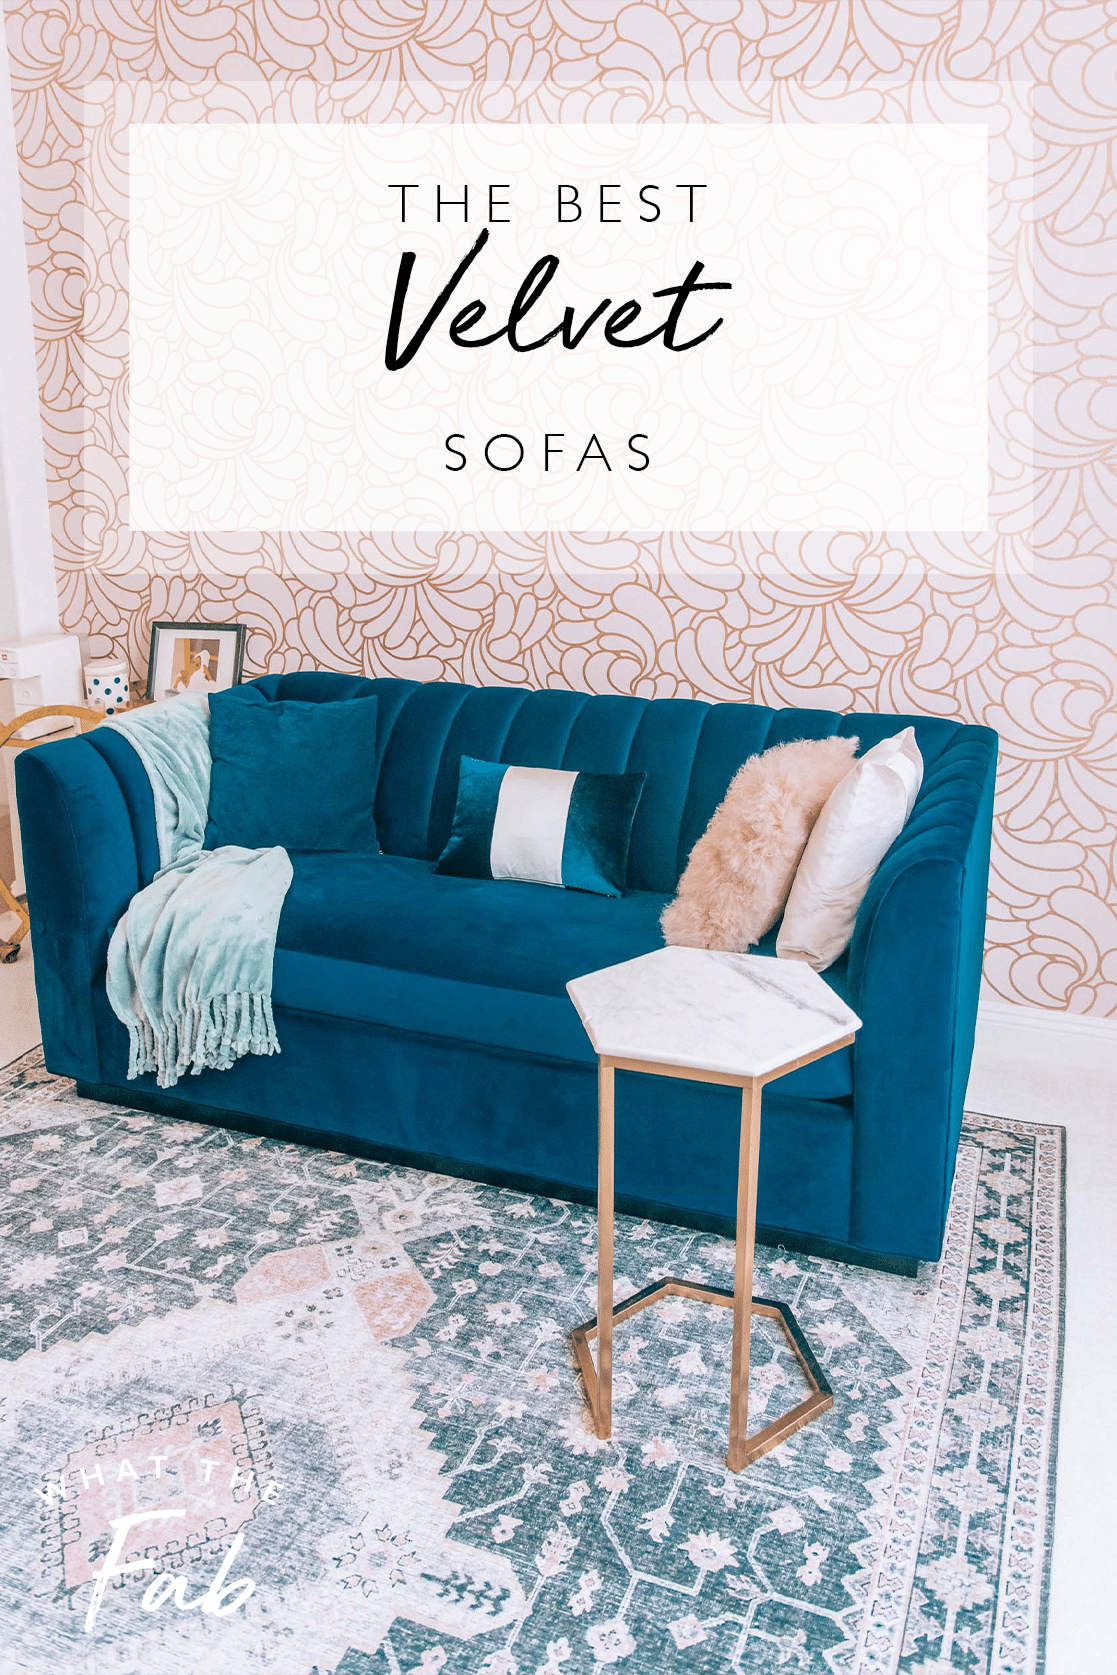 Velvet Sofas, by Blogger What The Fab